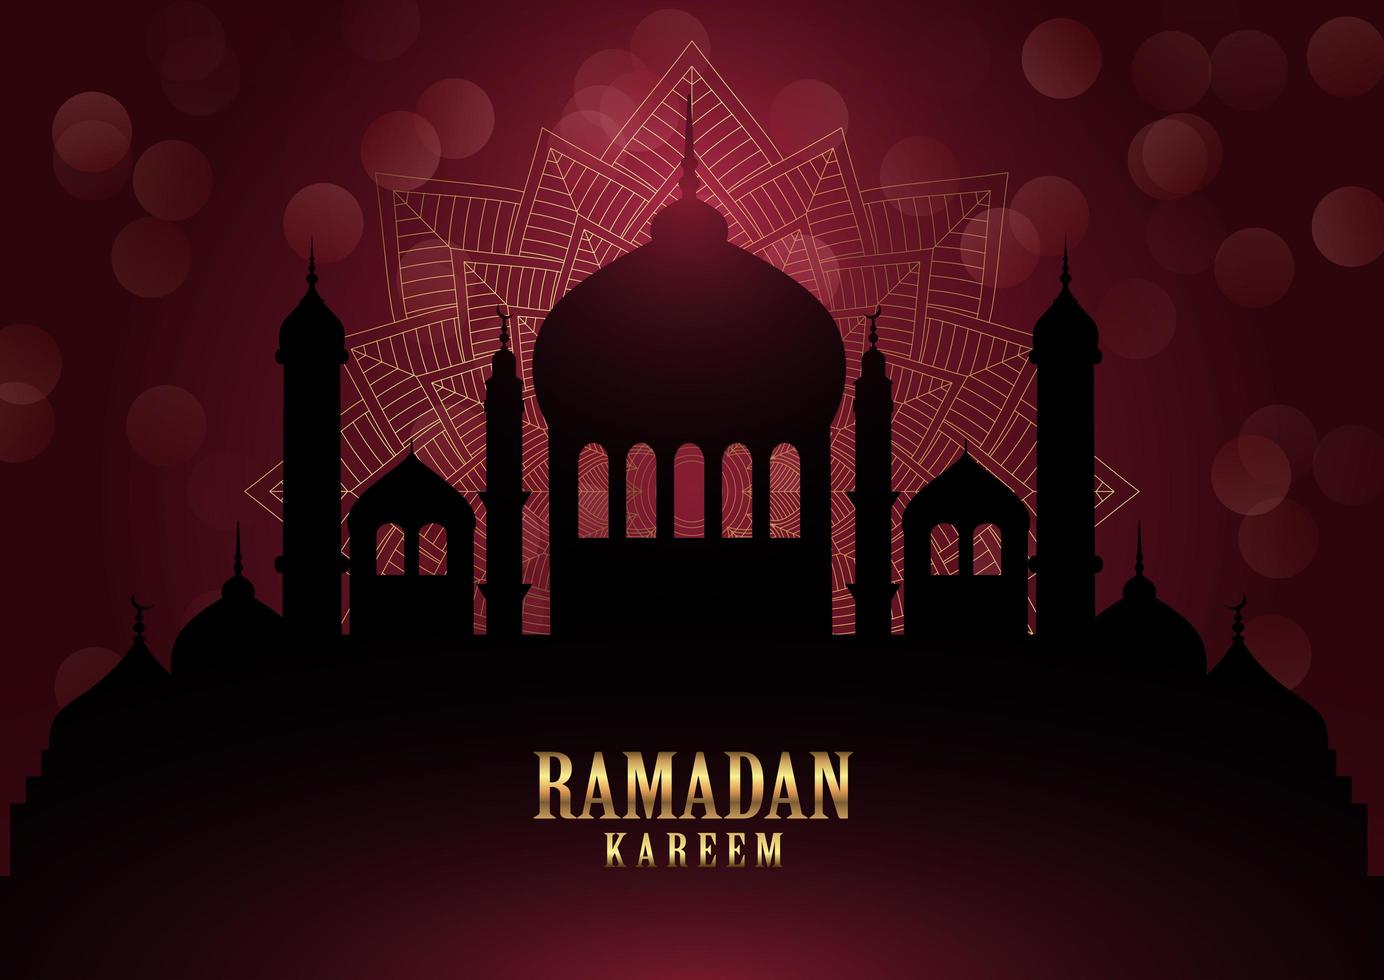 fond de ramadan kareem avec mandala élégant vecteur